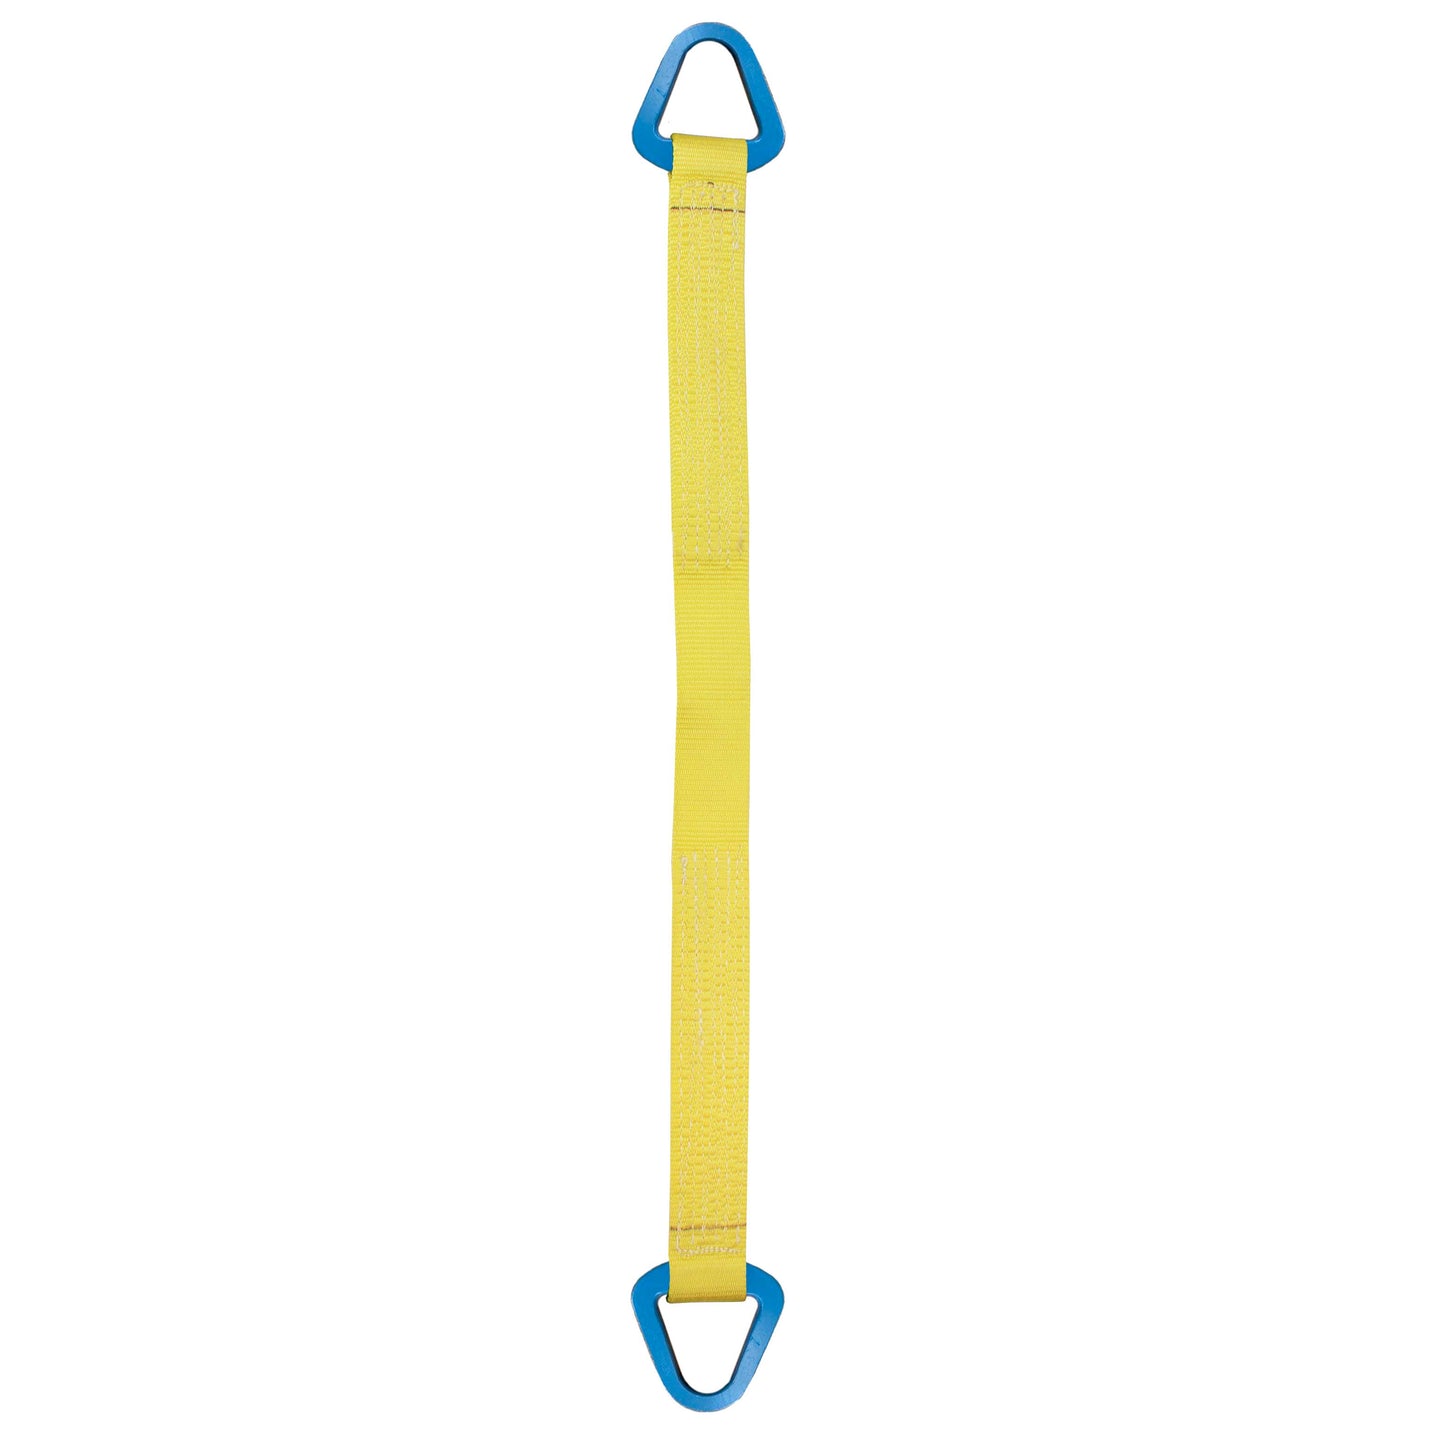 1" triangle nylon lifting sling